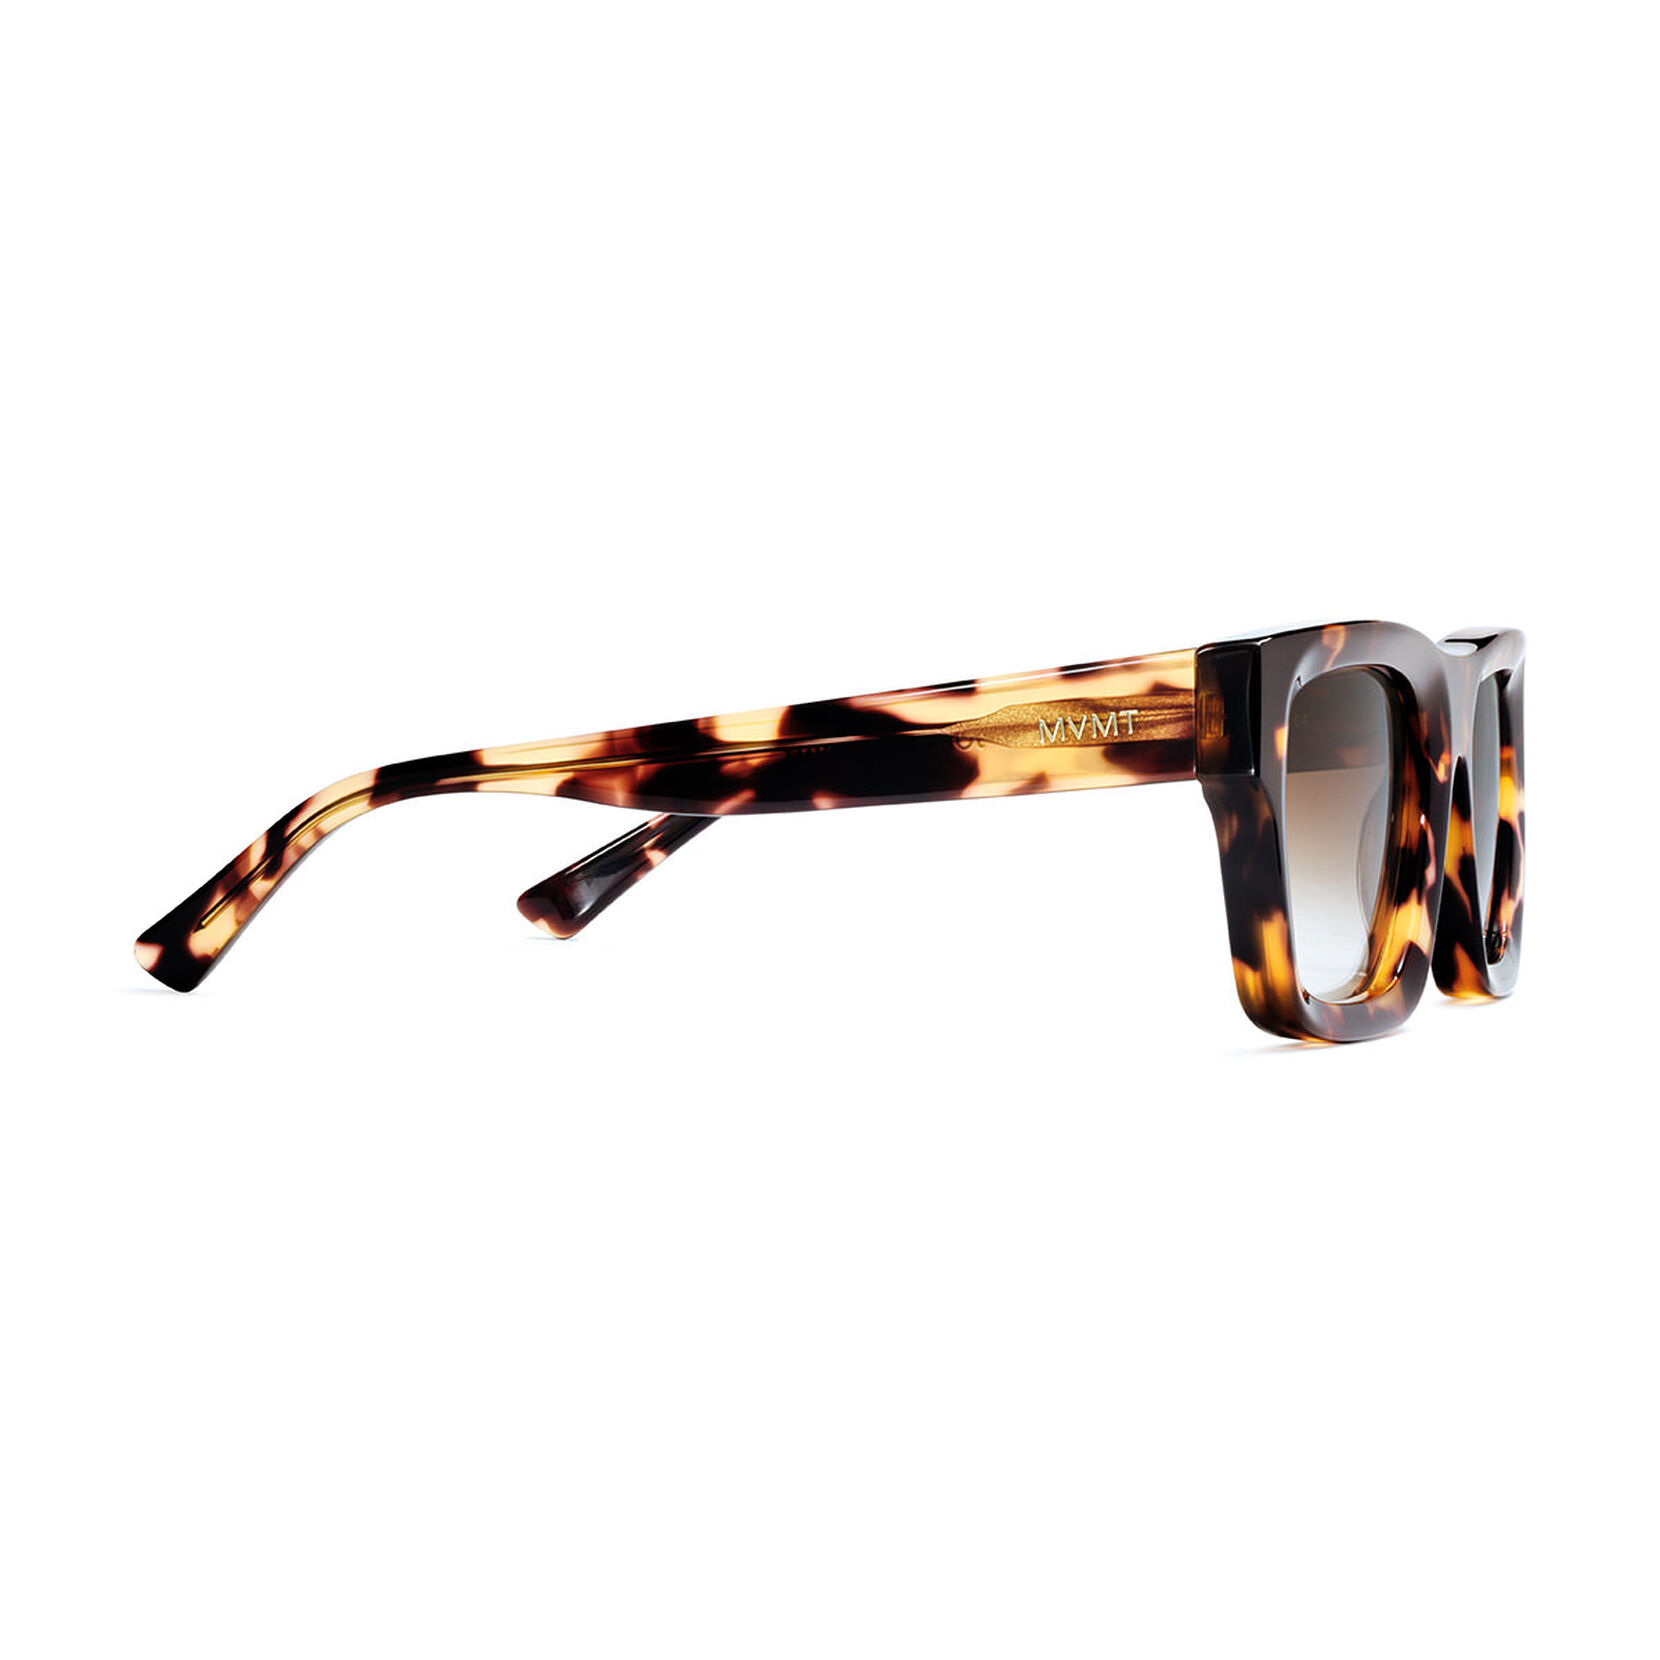 Black and gold Vadim sunglasses, brown lenses